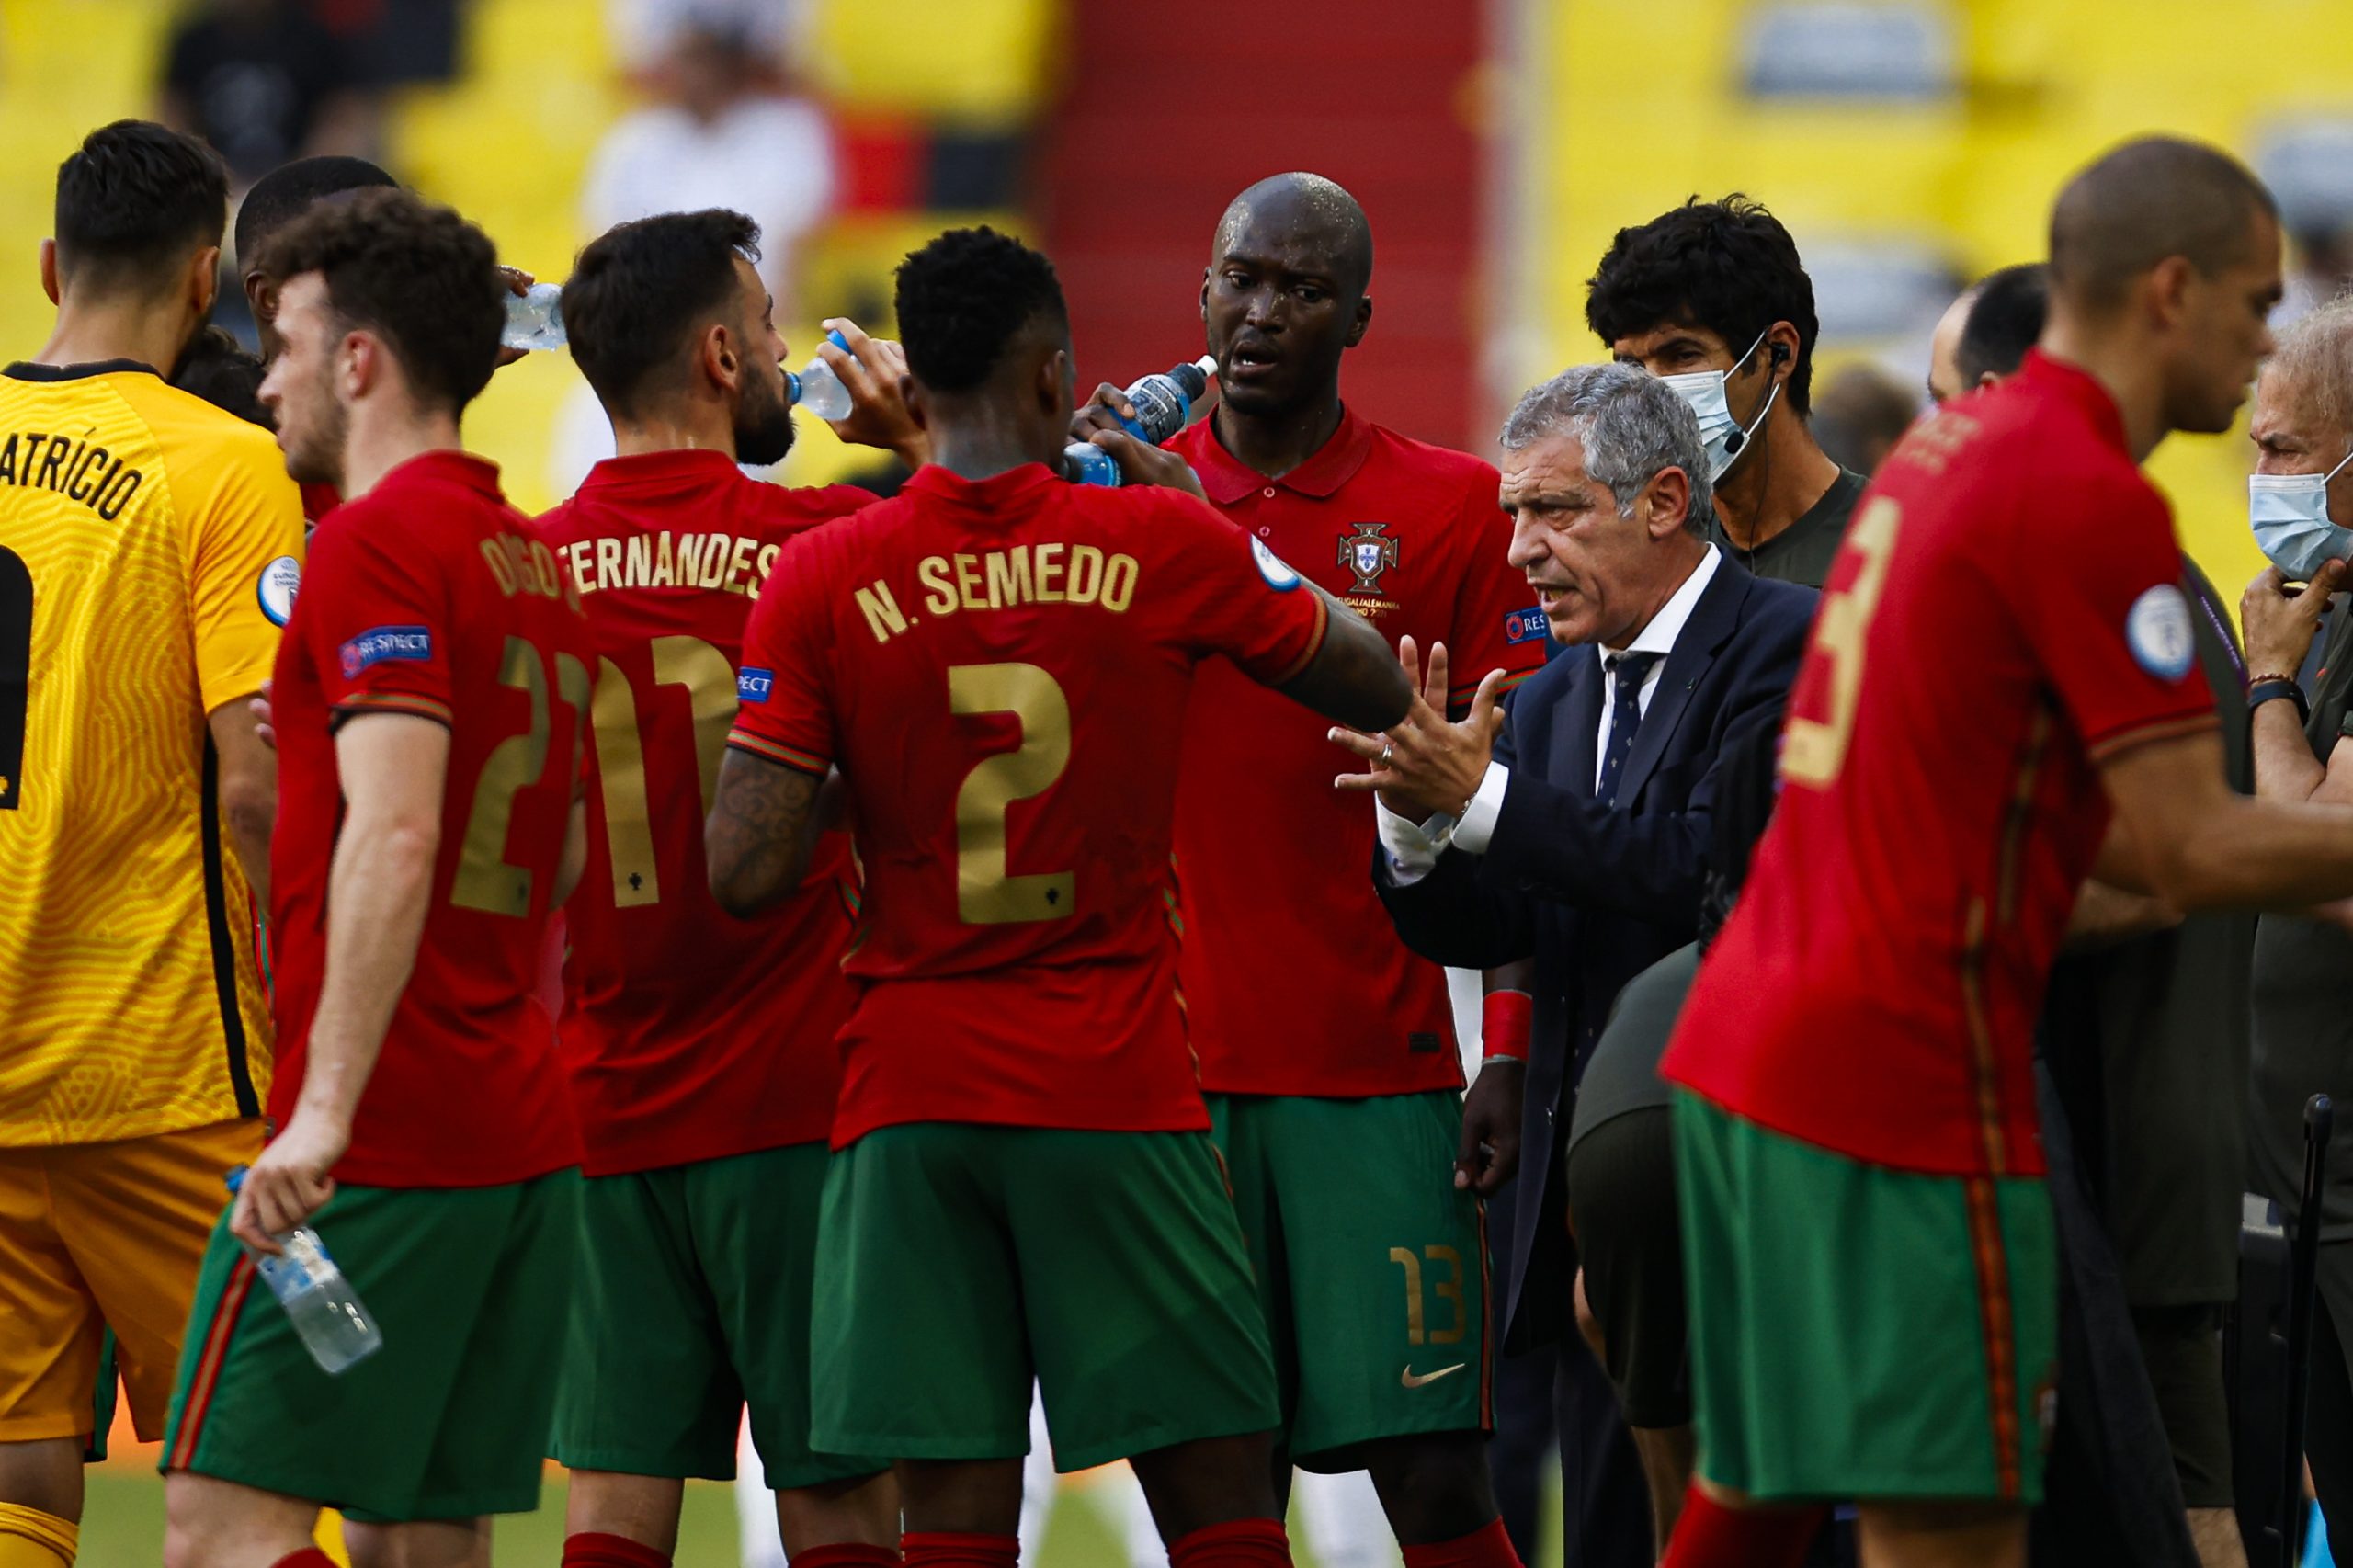 Bruno Fernandes bersama punggawa timnas Portugal lainnya. (@selecaoportugal/Twitter)